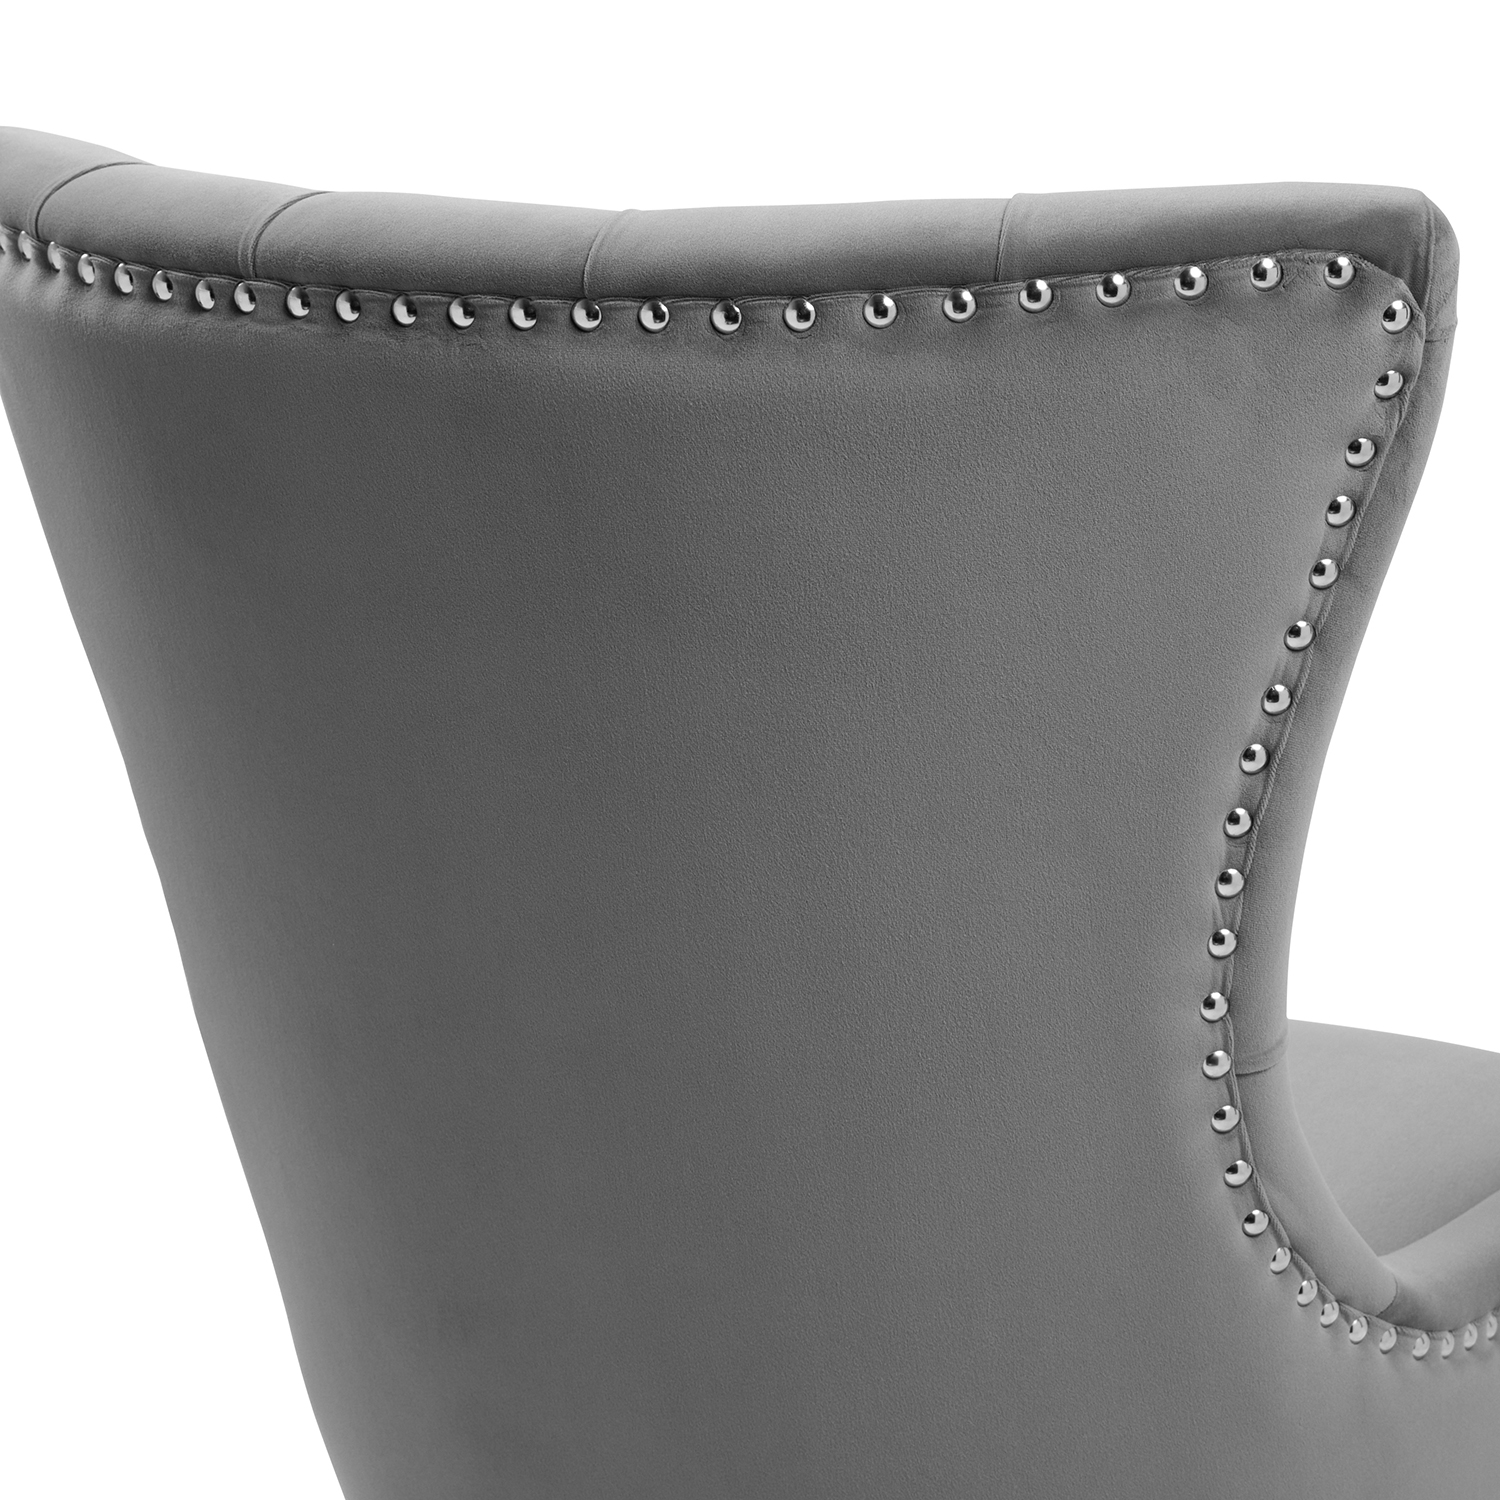 New Knightsbridge Grey Brushed Velvet Dining Chair – Silver Studs